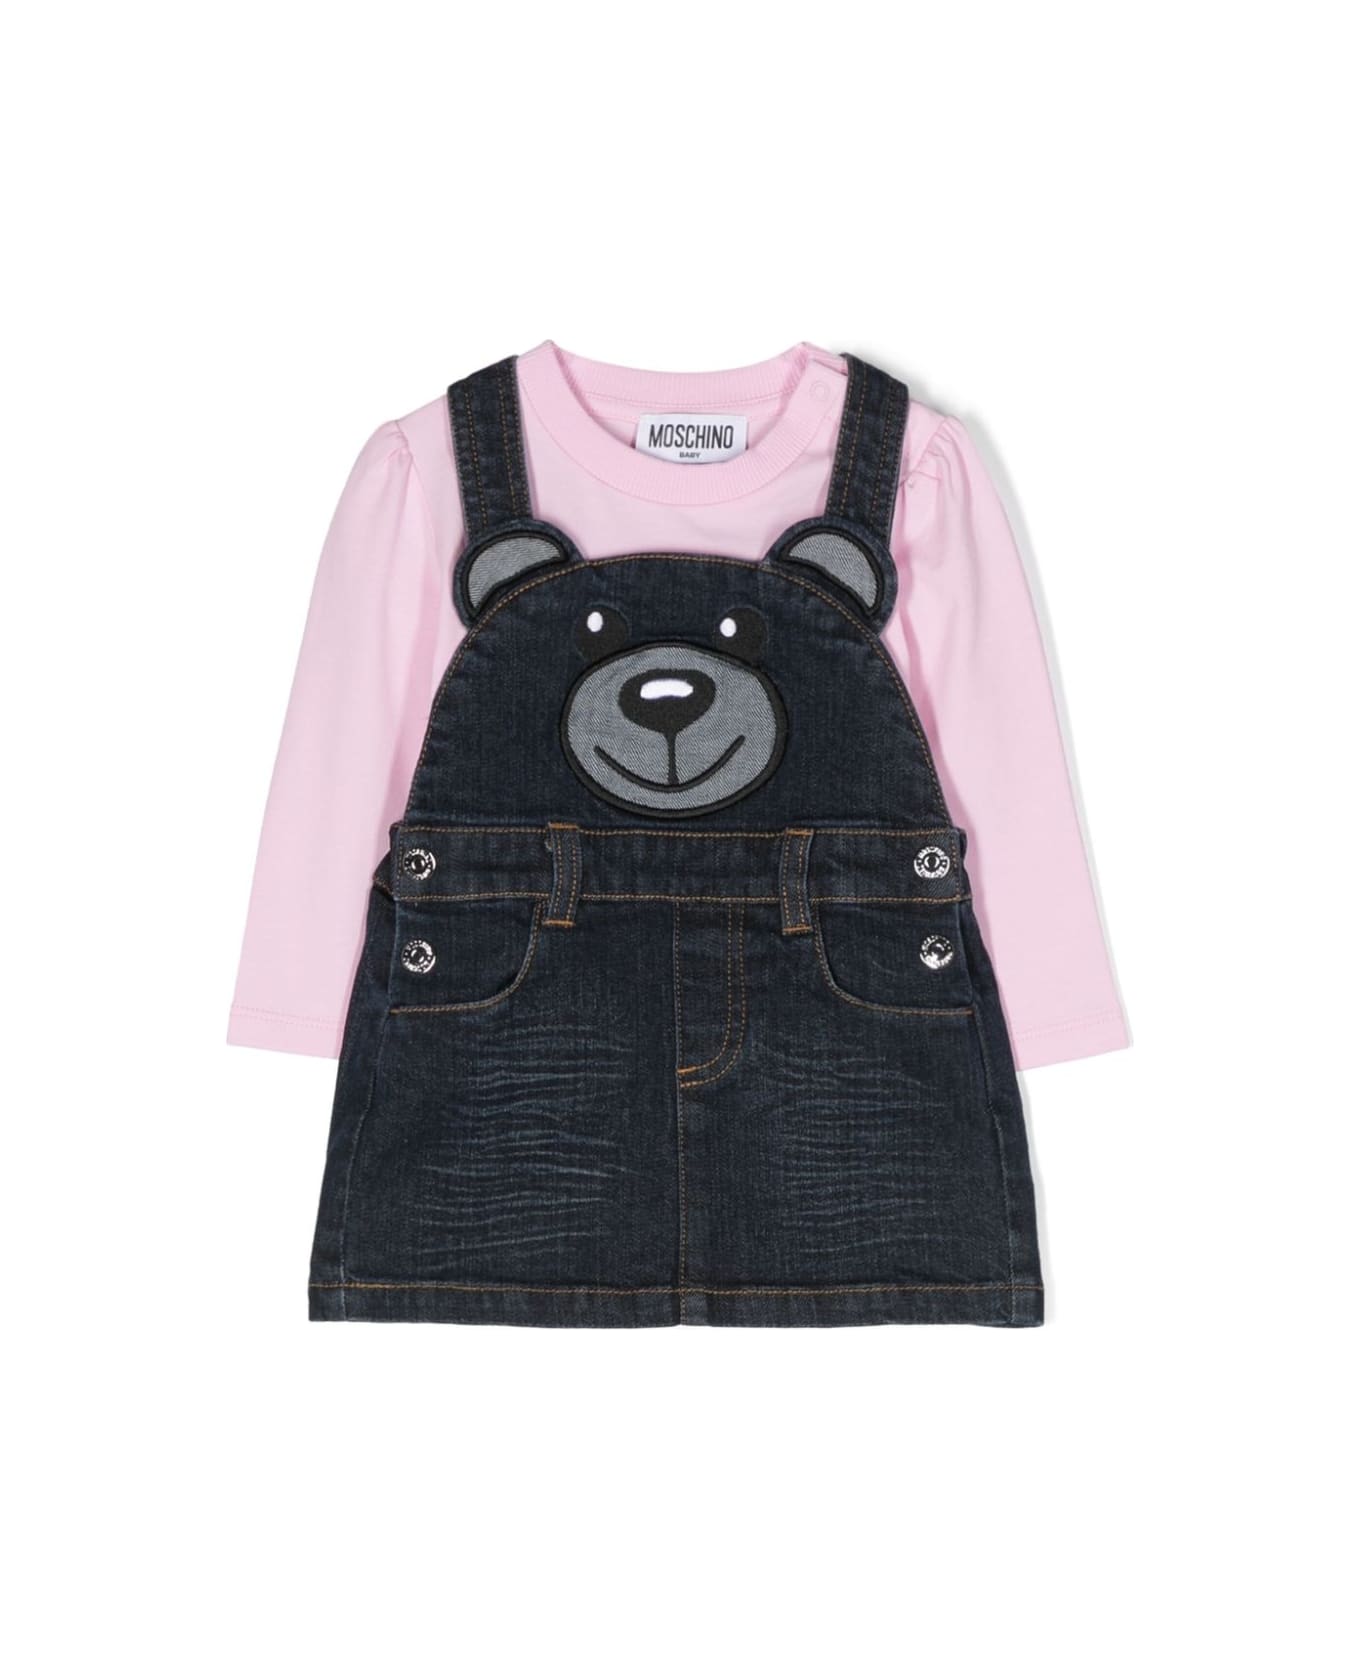 Moschino Dress With Teddy Bear Motif - Pink